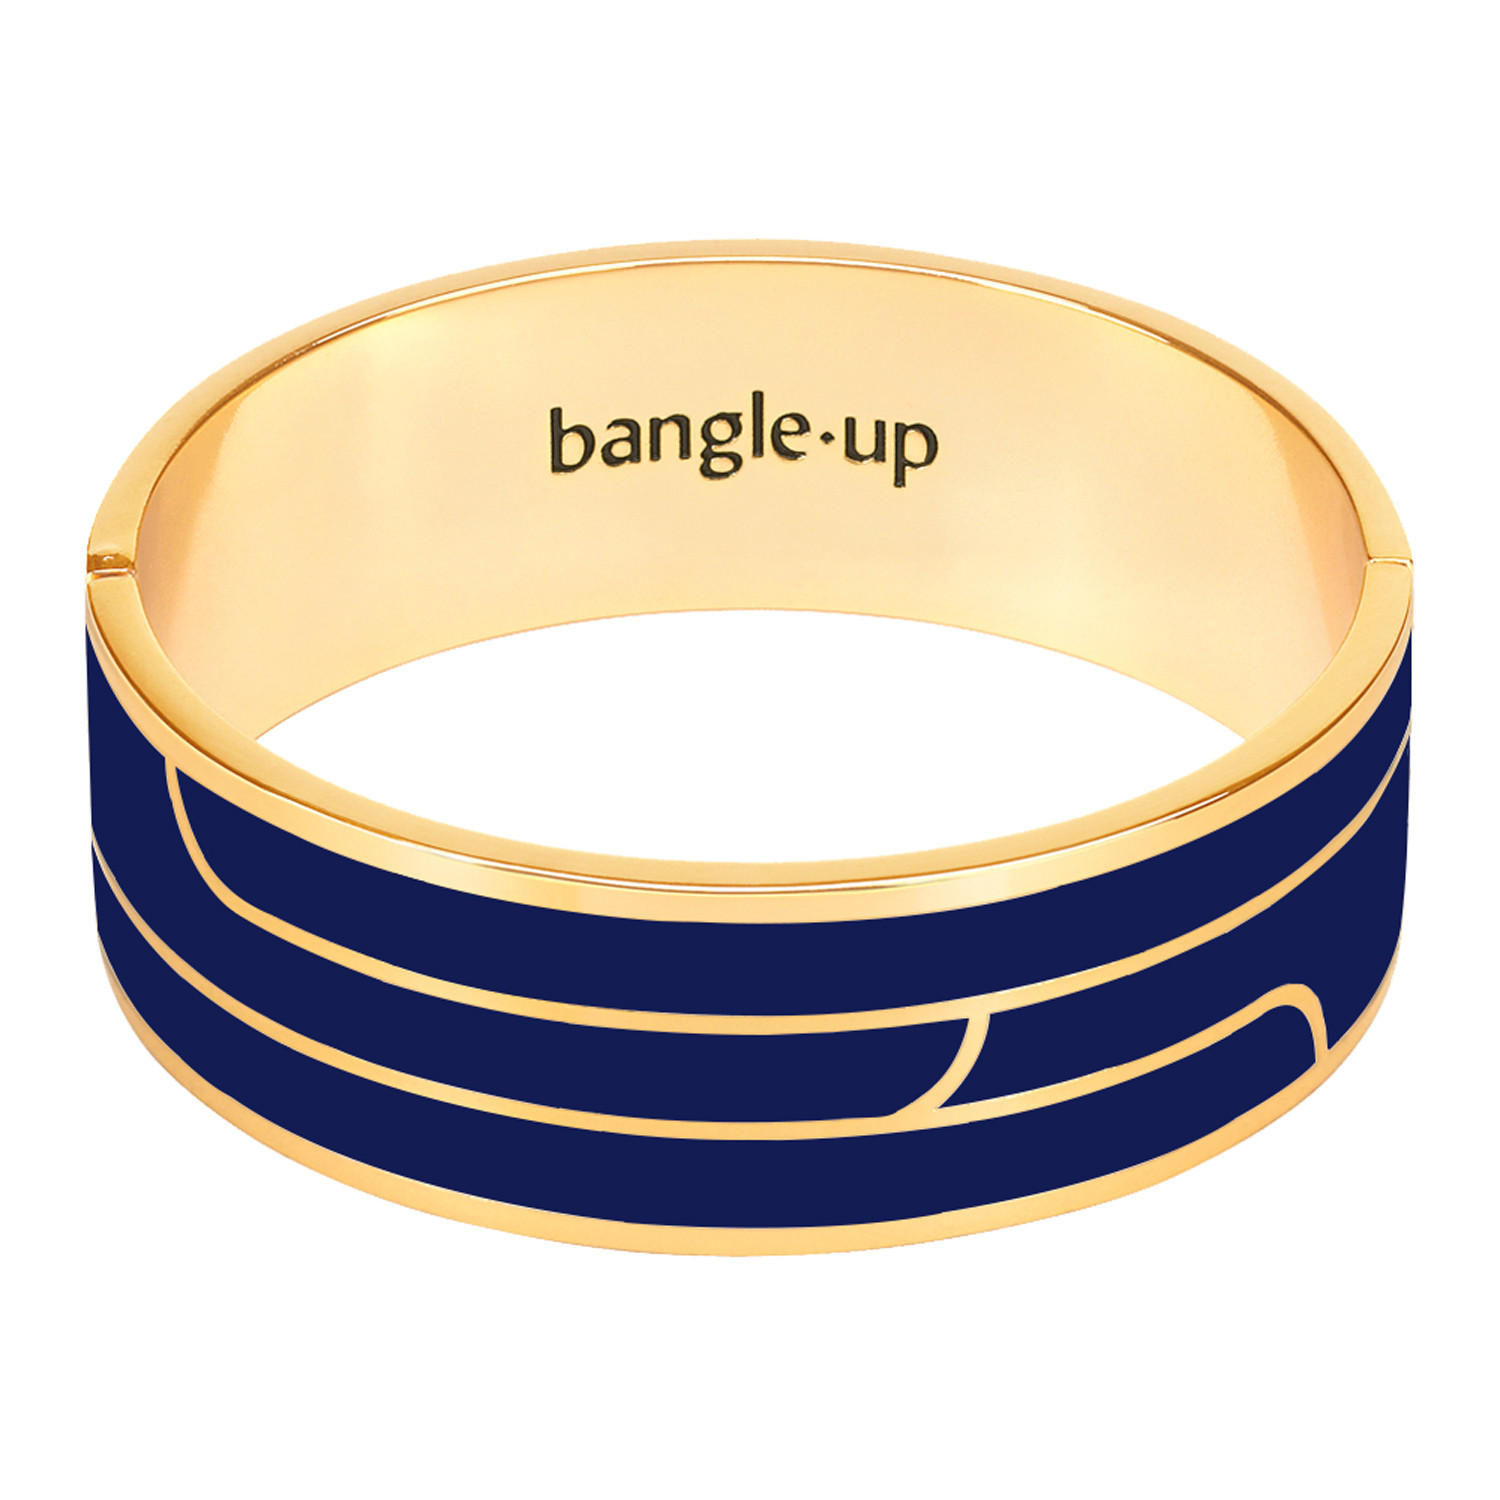 Bracelet jonc Bangle Up avec fermoir émail bleu nuit
collection Gaya taille 2